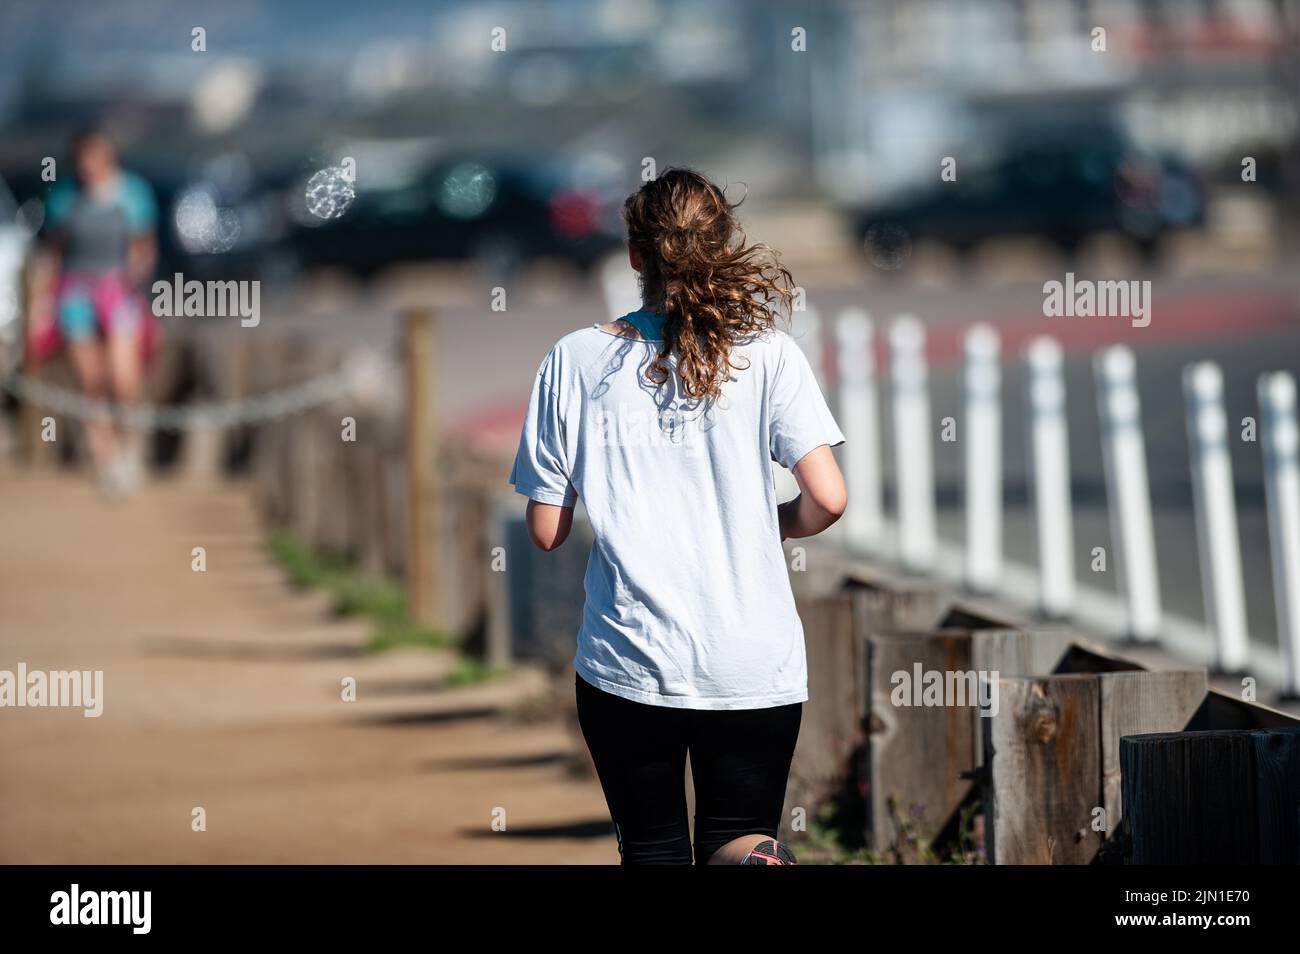 Immagine di una donna in fuga mattutina. Trail Runner, Beach Runner, San Francisco, California, West Coast, Salute, benessere, esercizio fisico Foto Stock